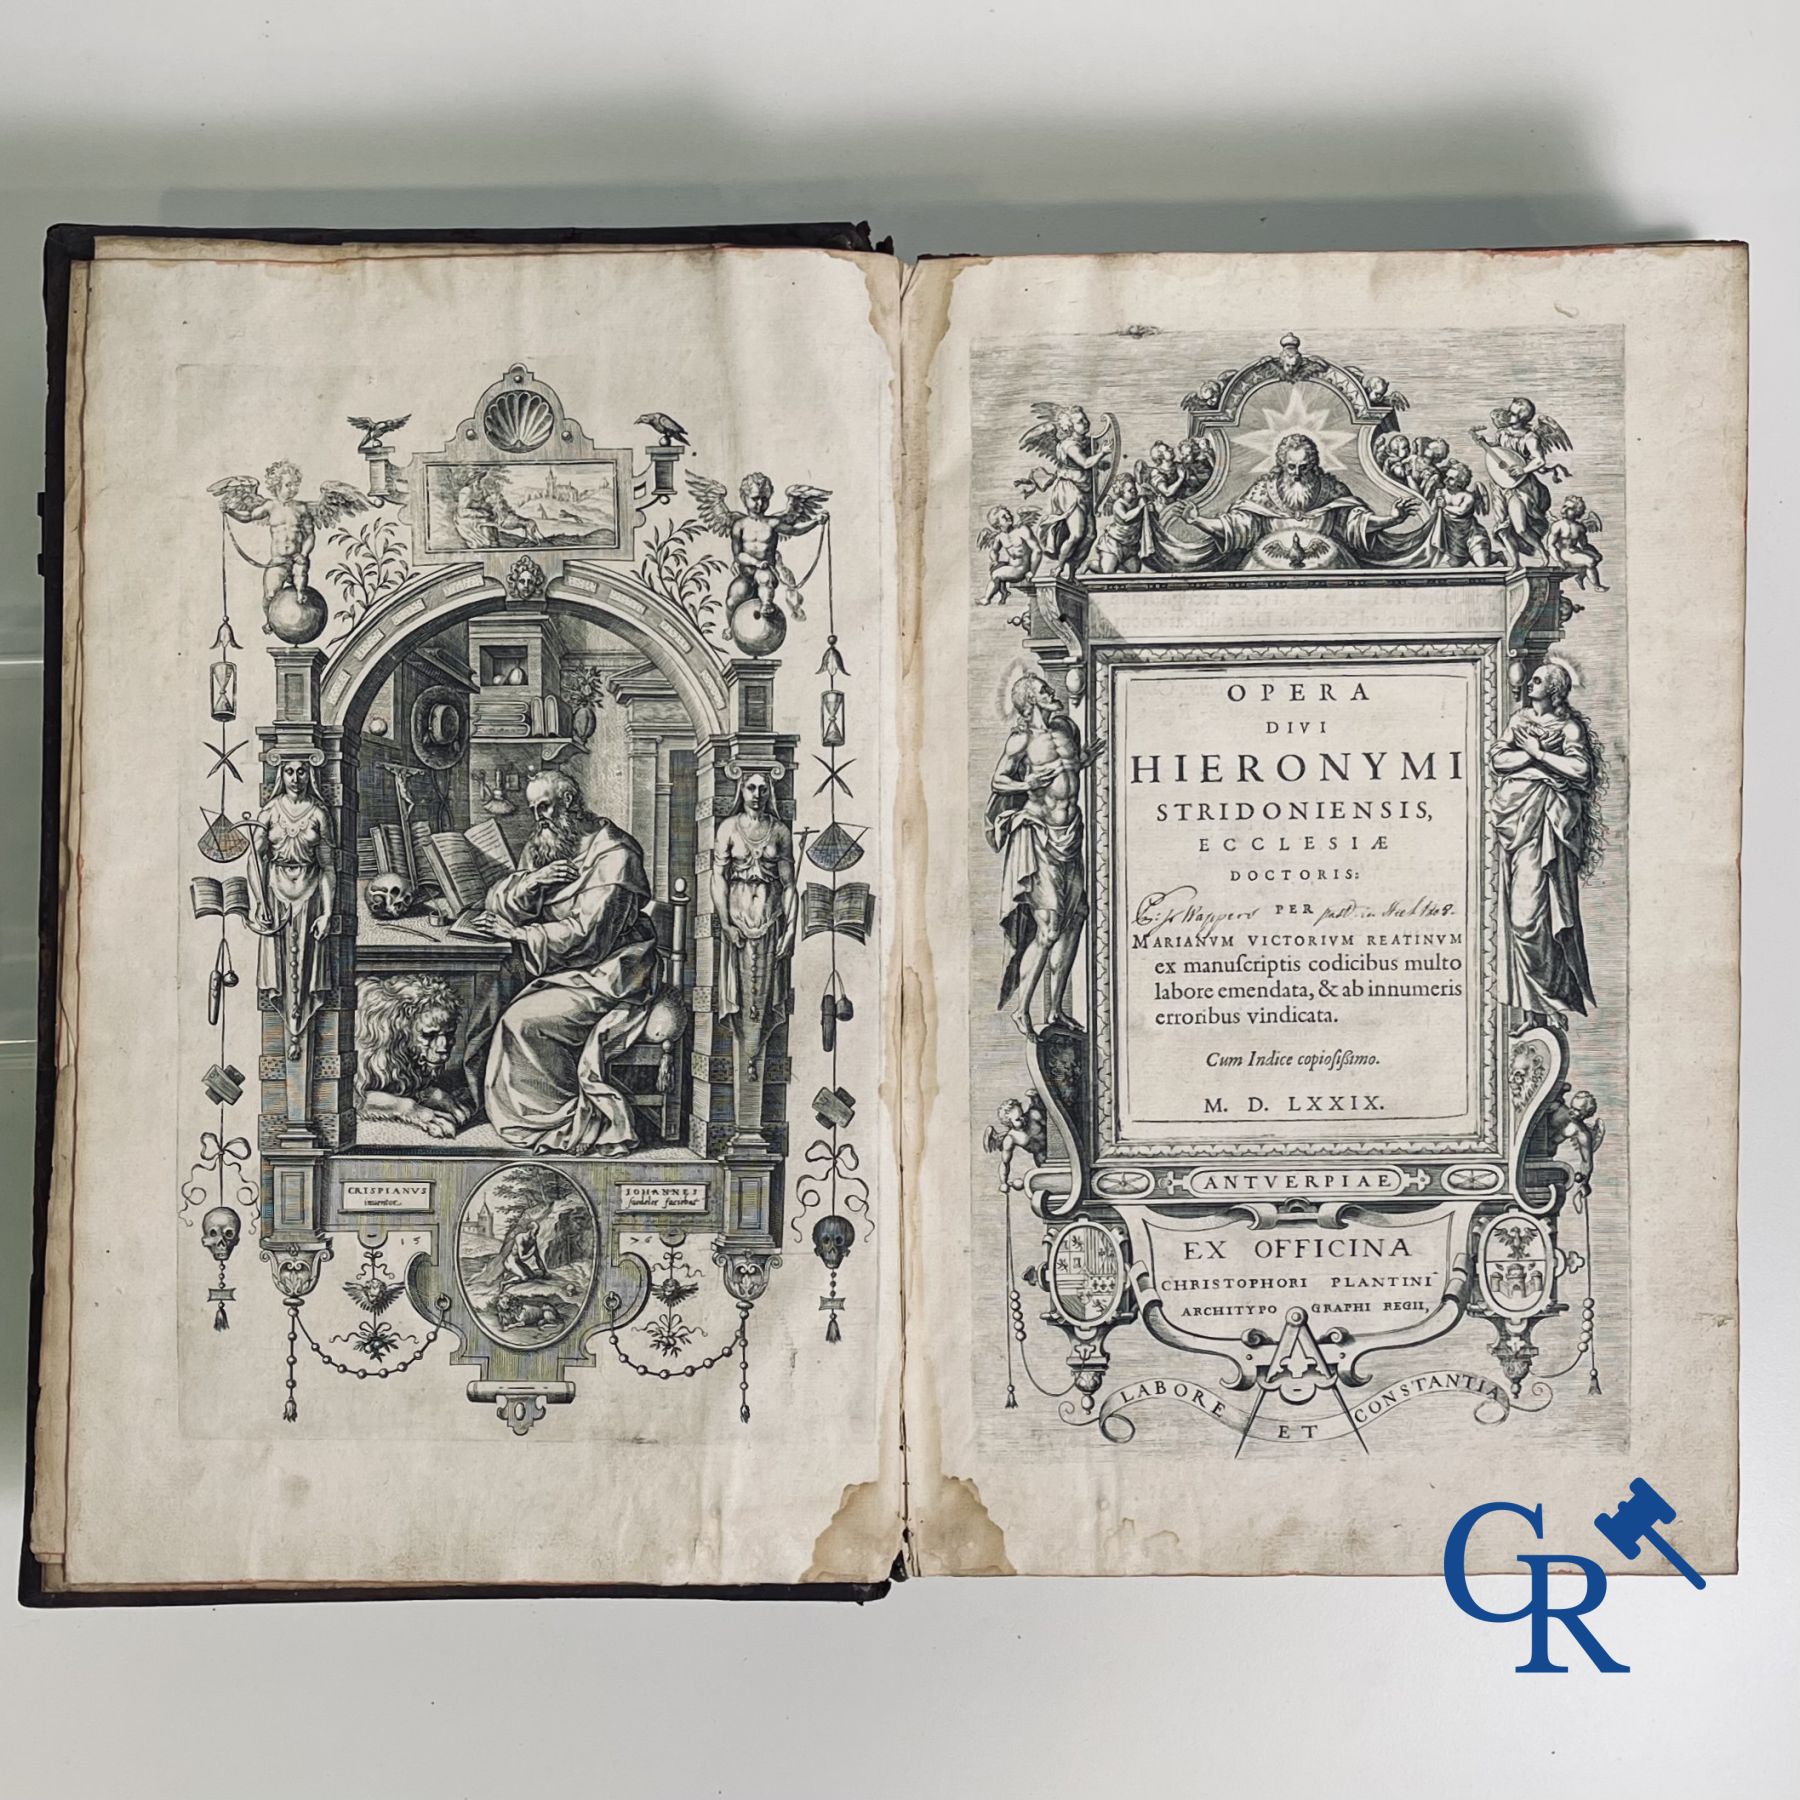 Early printed books: Les oeuvres de Saint Jerome, Mariani Victorij Reatini. Atelier Plantijn (1578-1579), Antwerp.